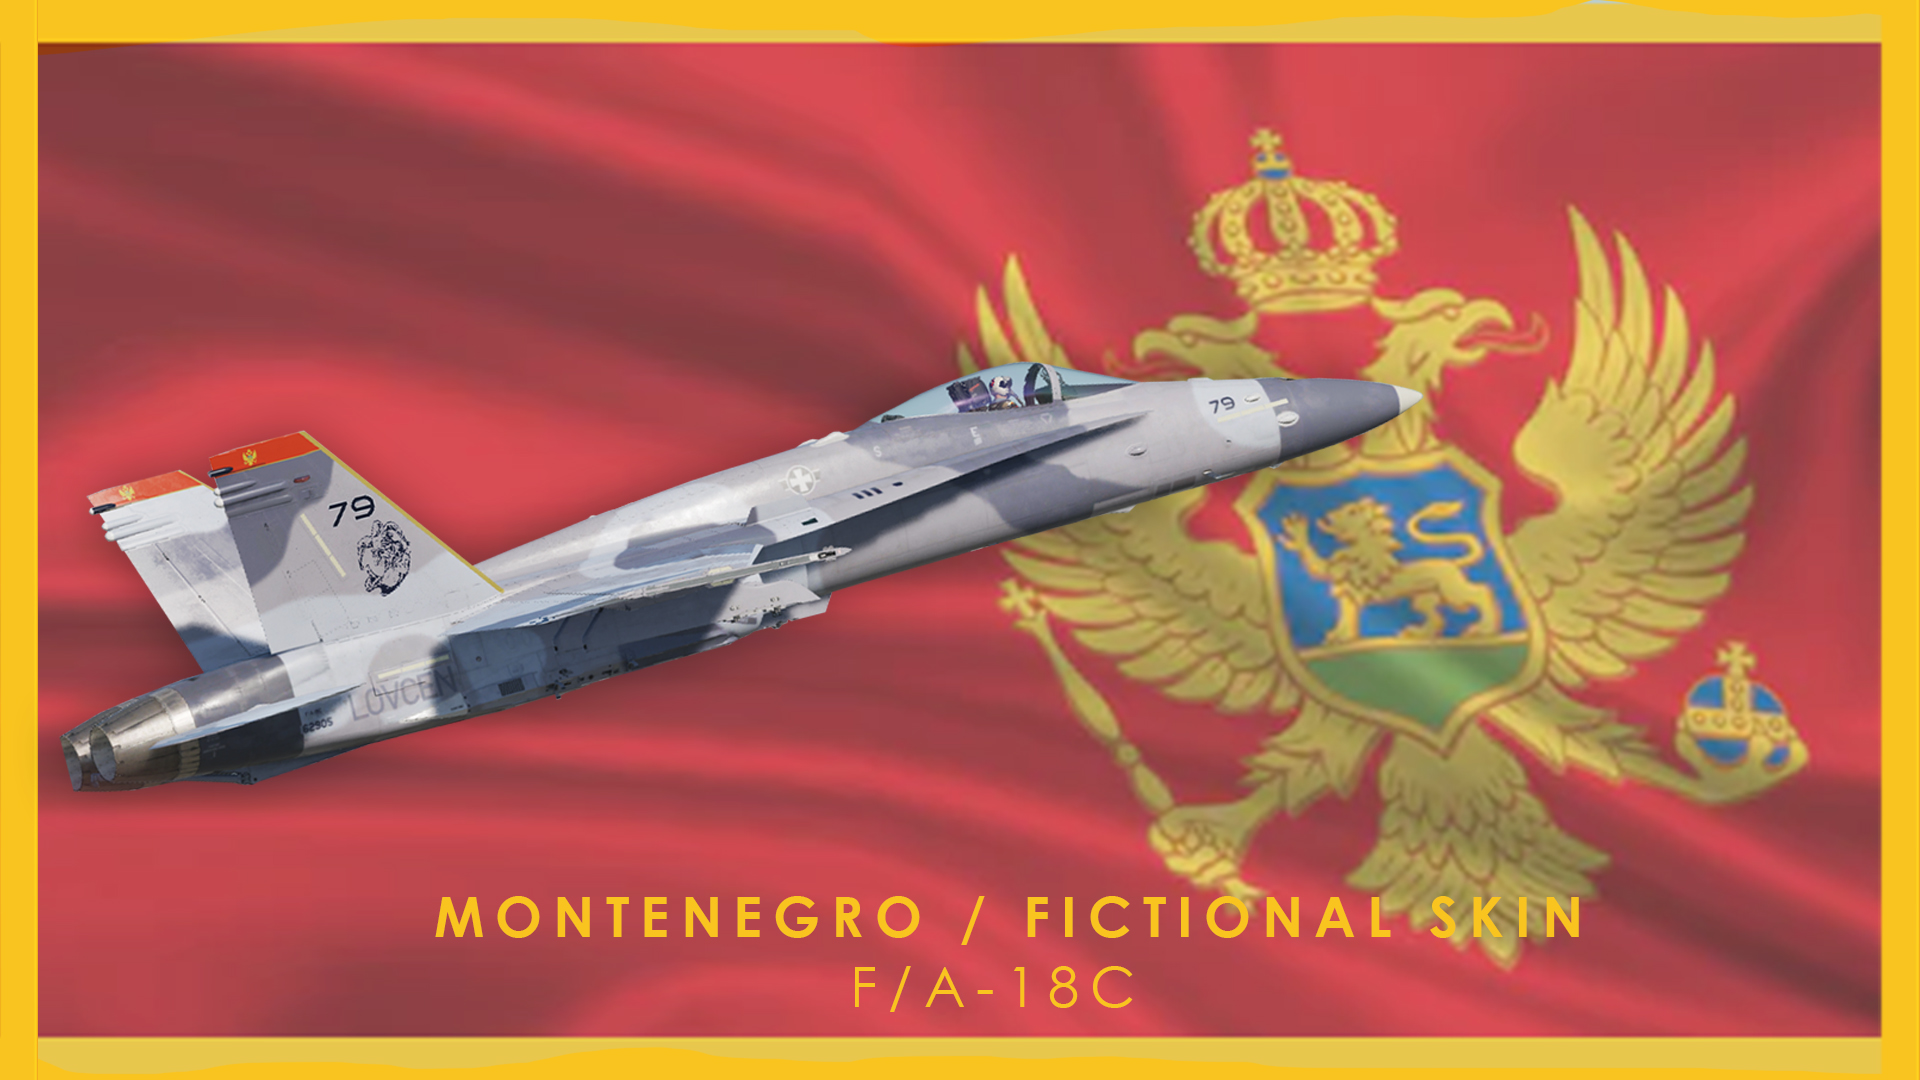 F/A-18C Montenegro - fictional skin